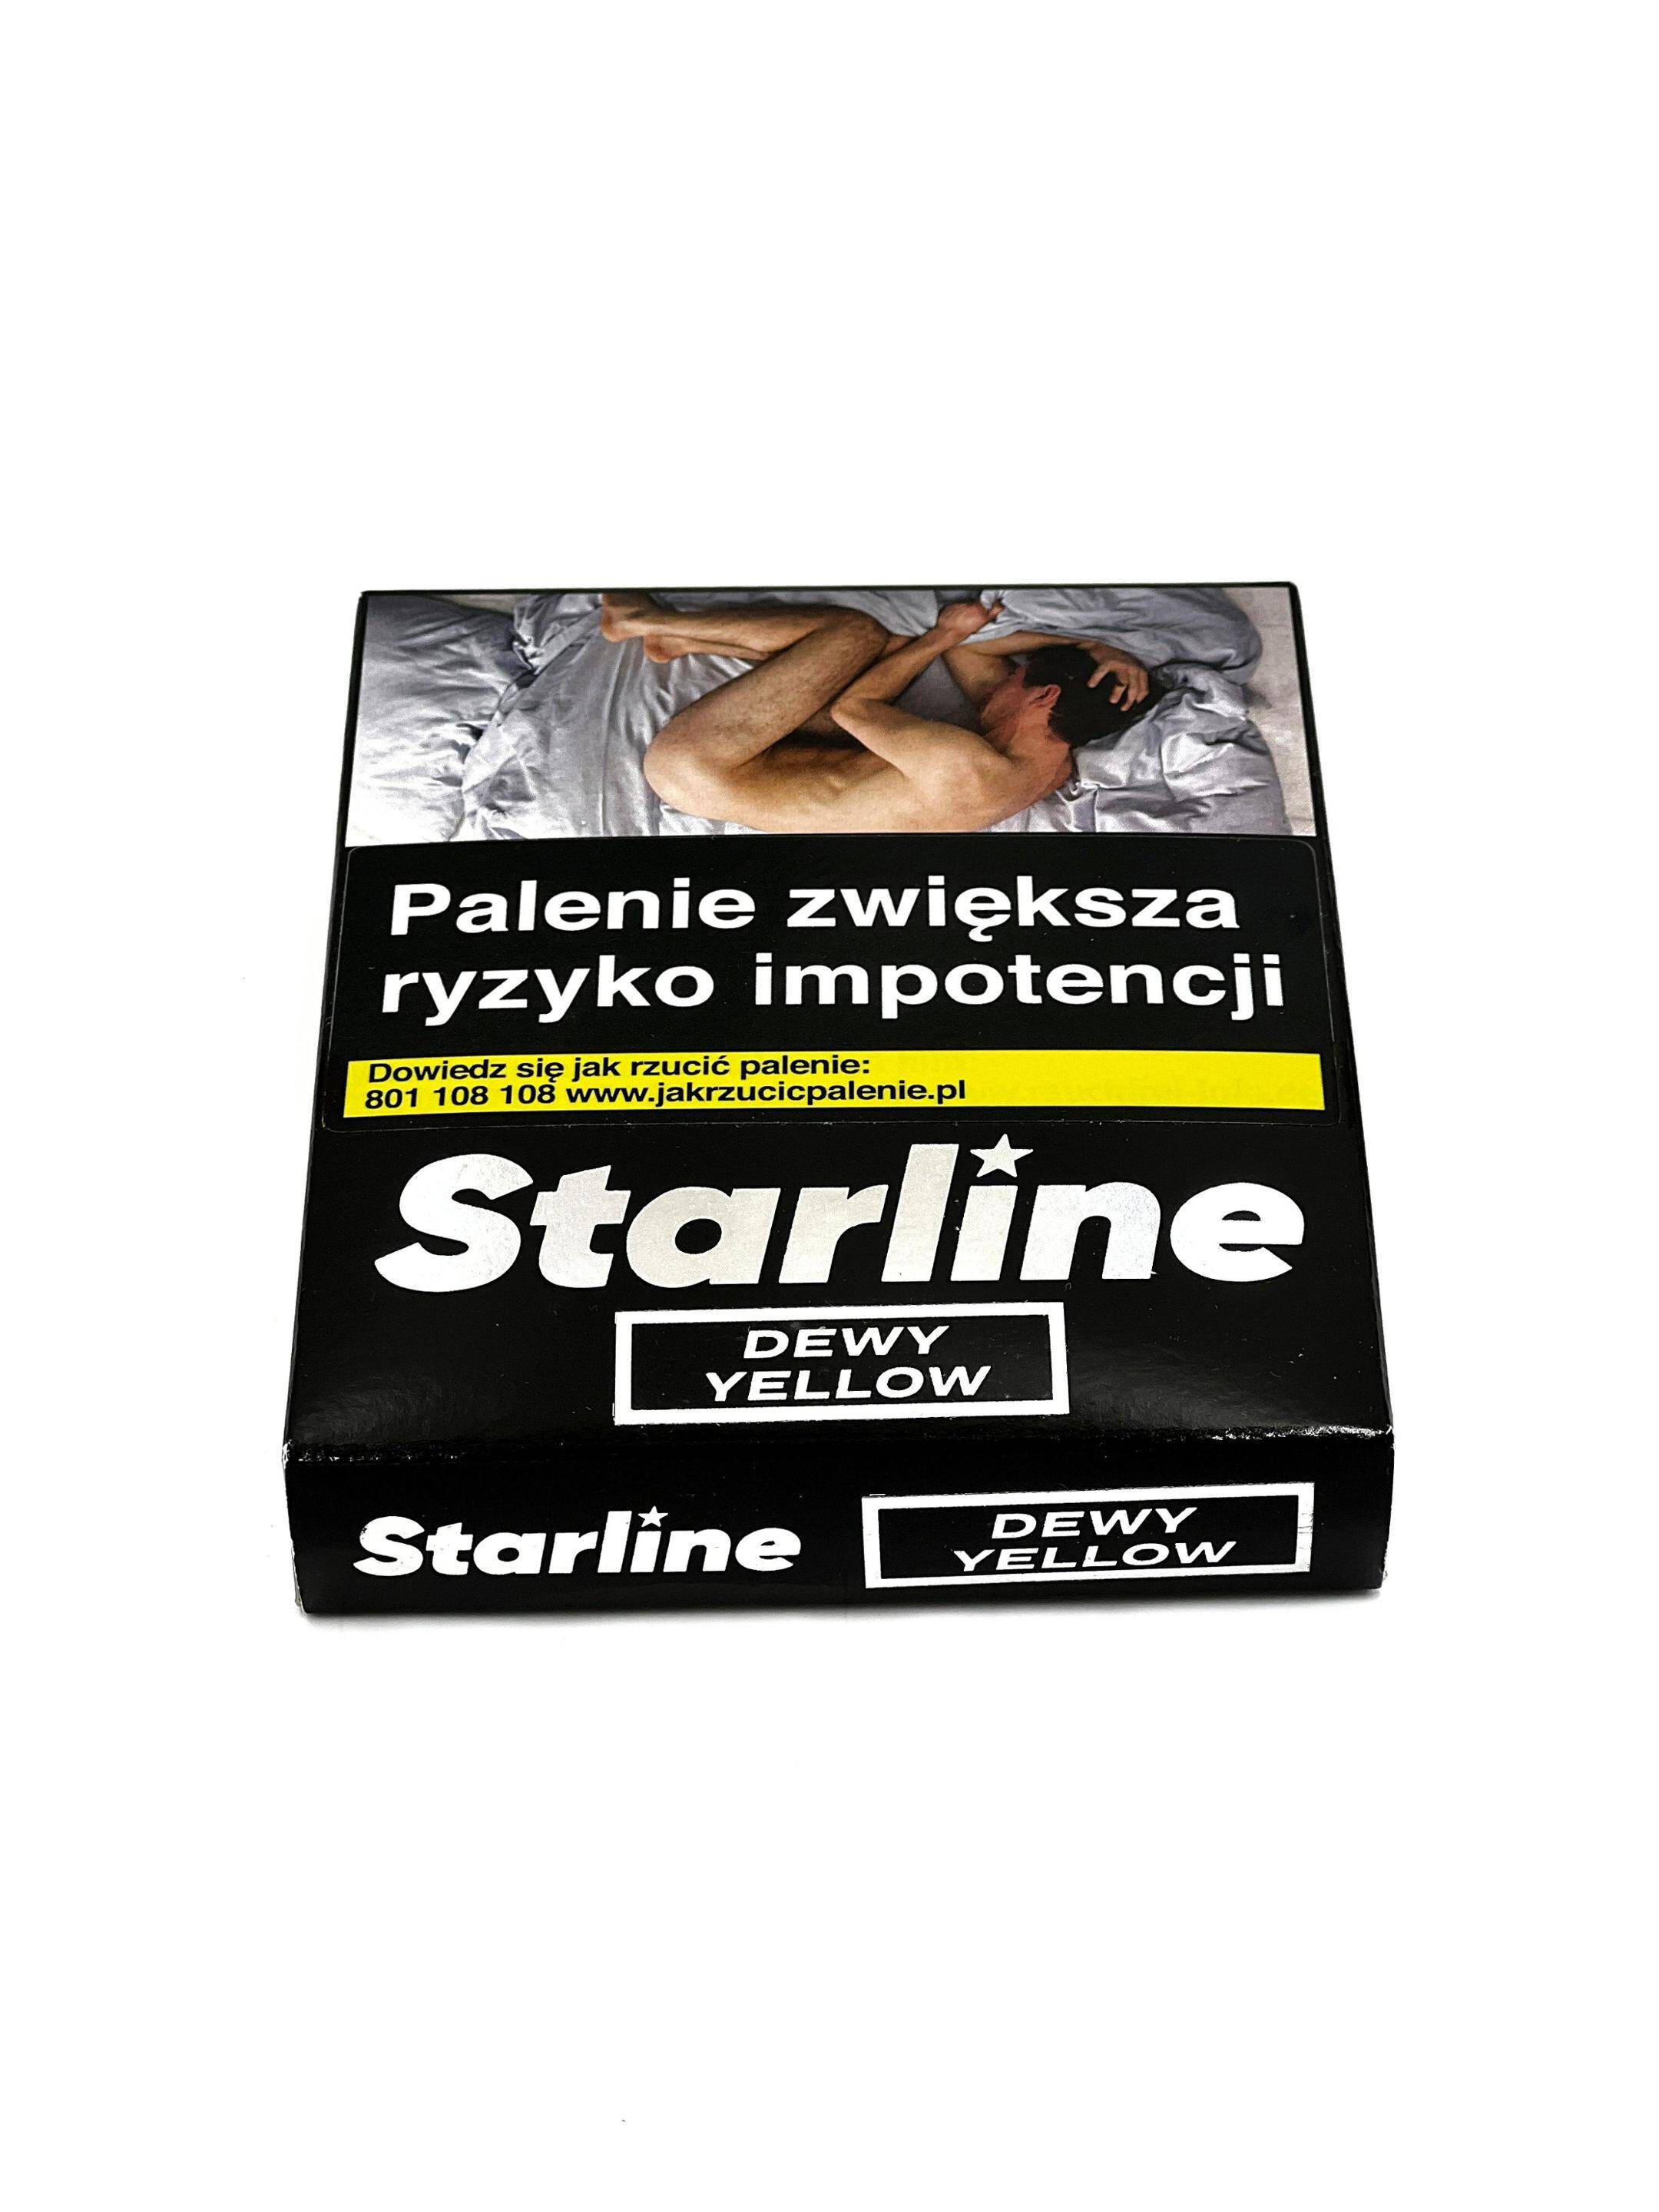 Tobacco STARLINE Dewy Yellow 200g(160PLN)